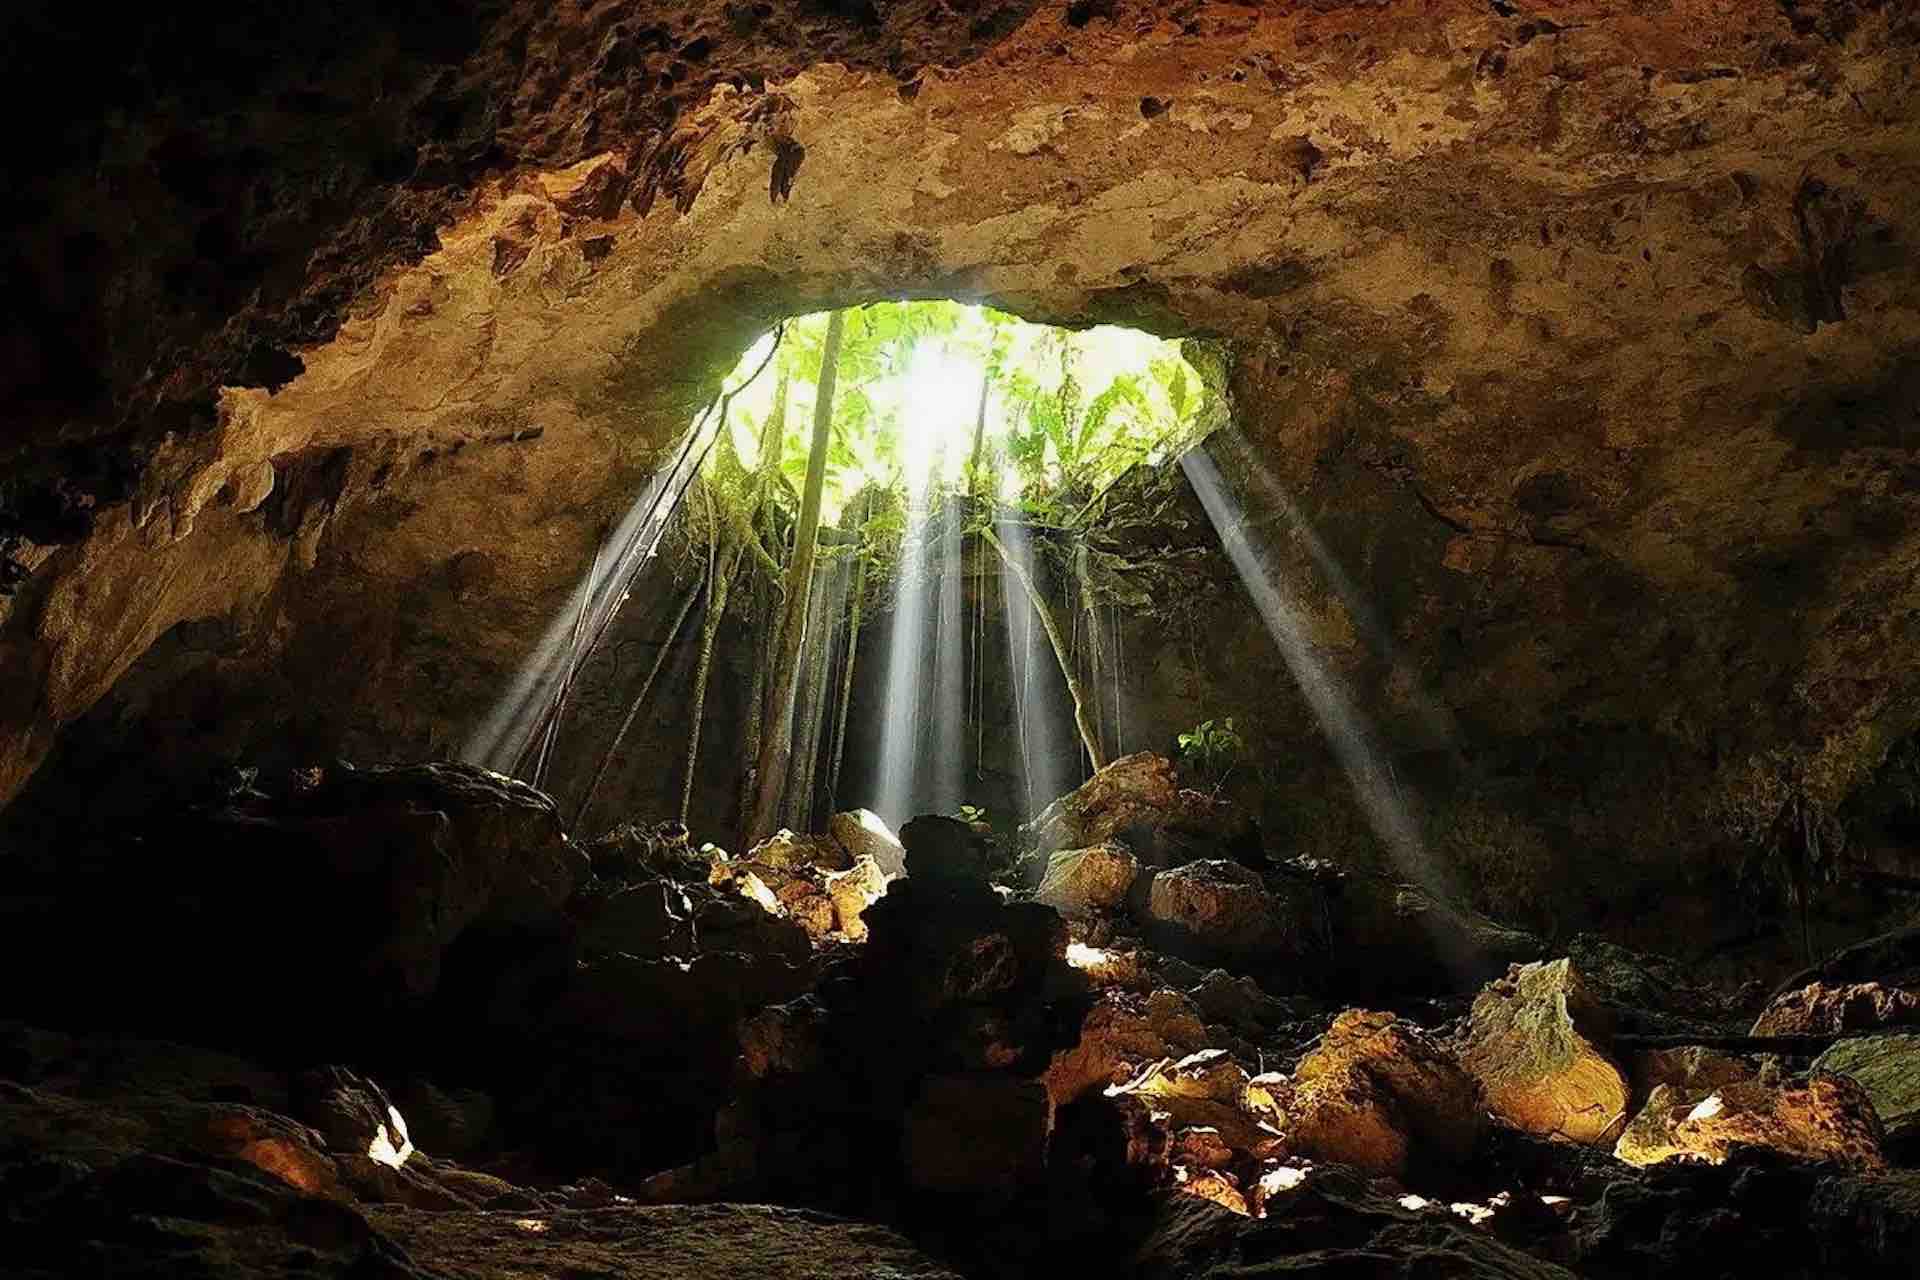 ATV Playa del Carmen Secret Caves tour skylight in cave